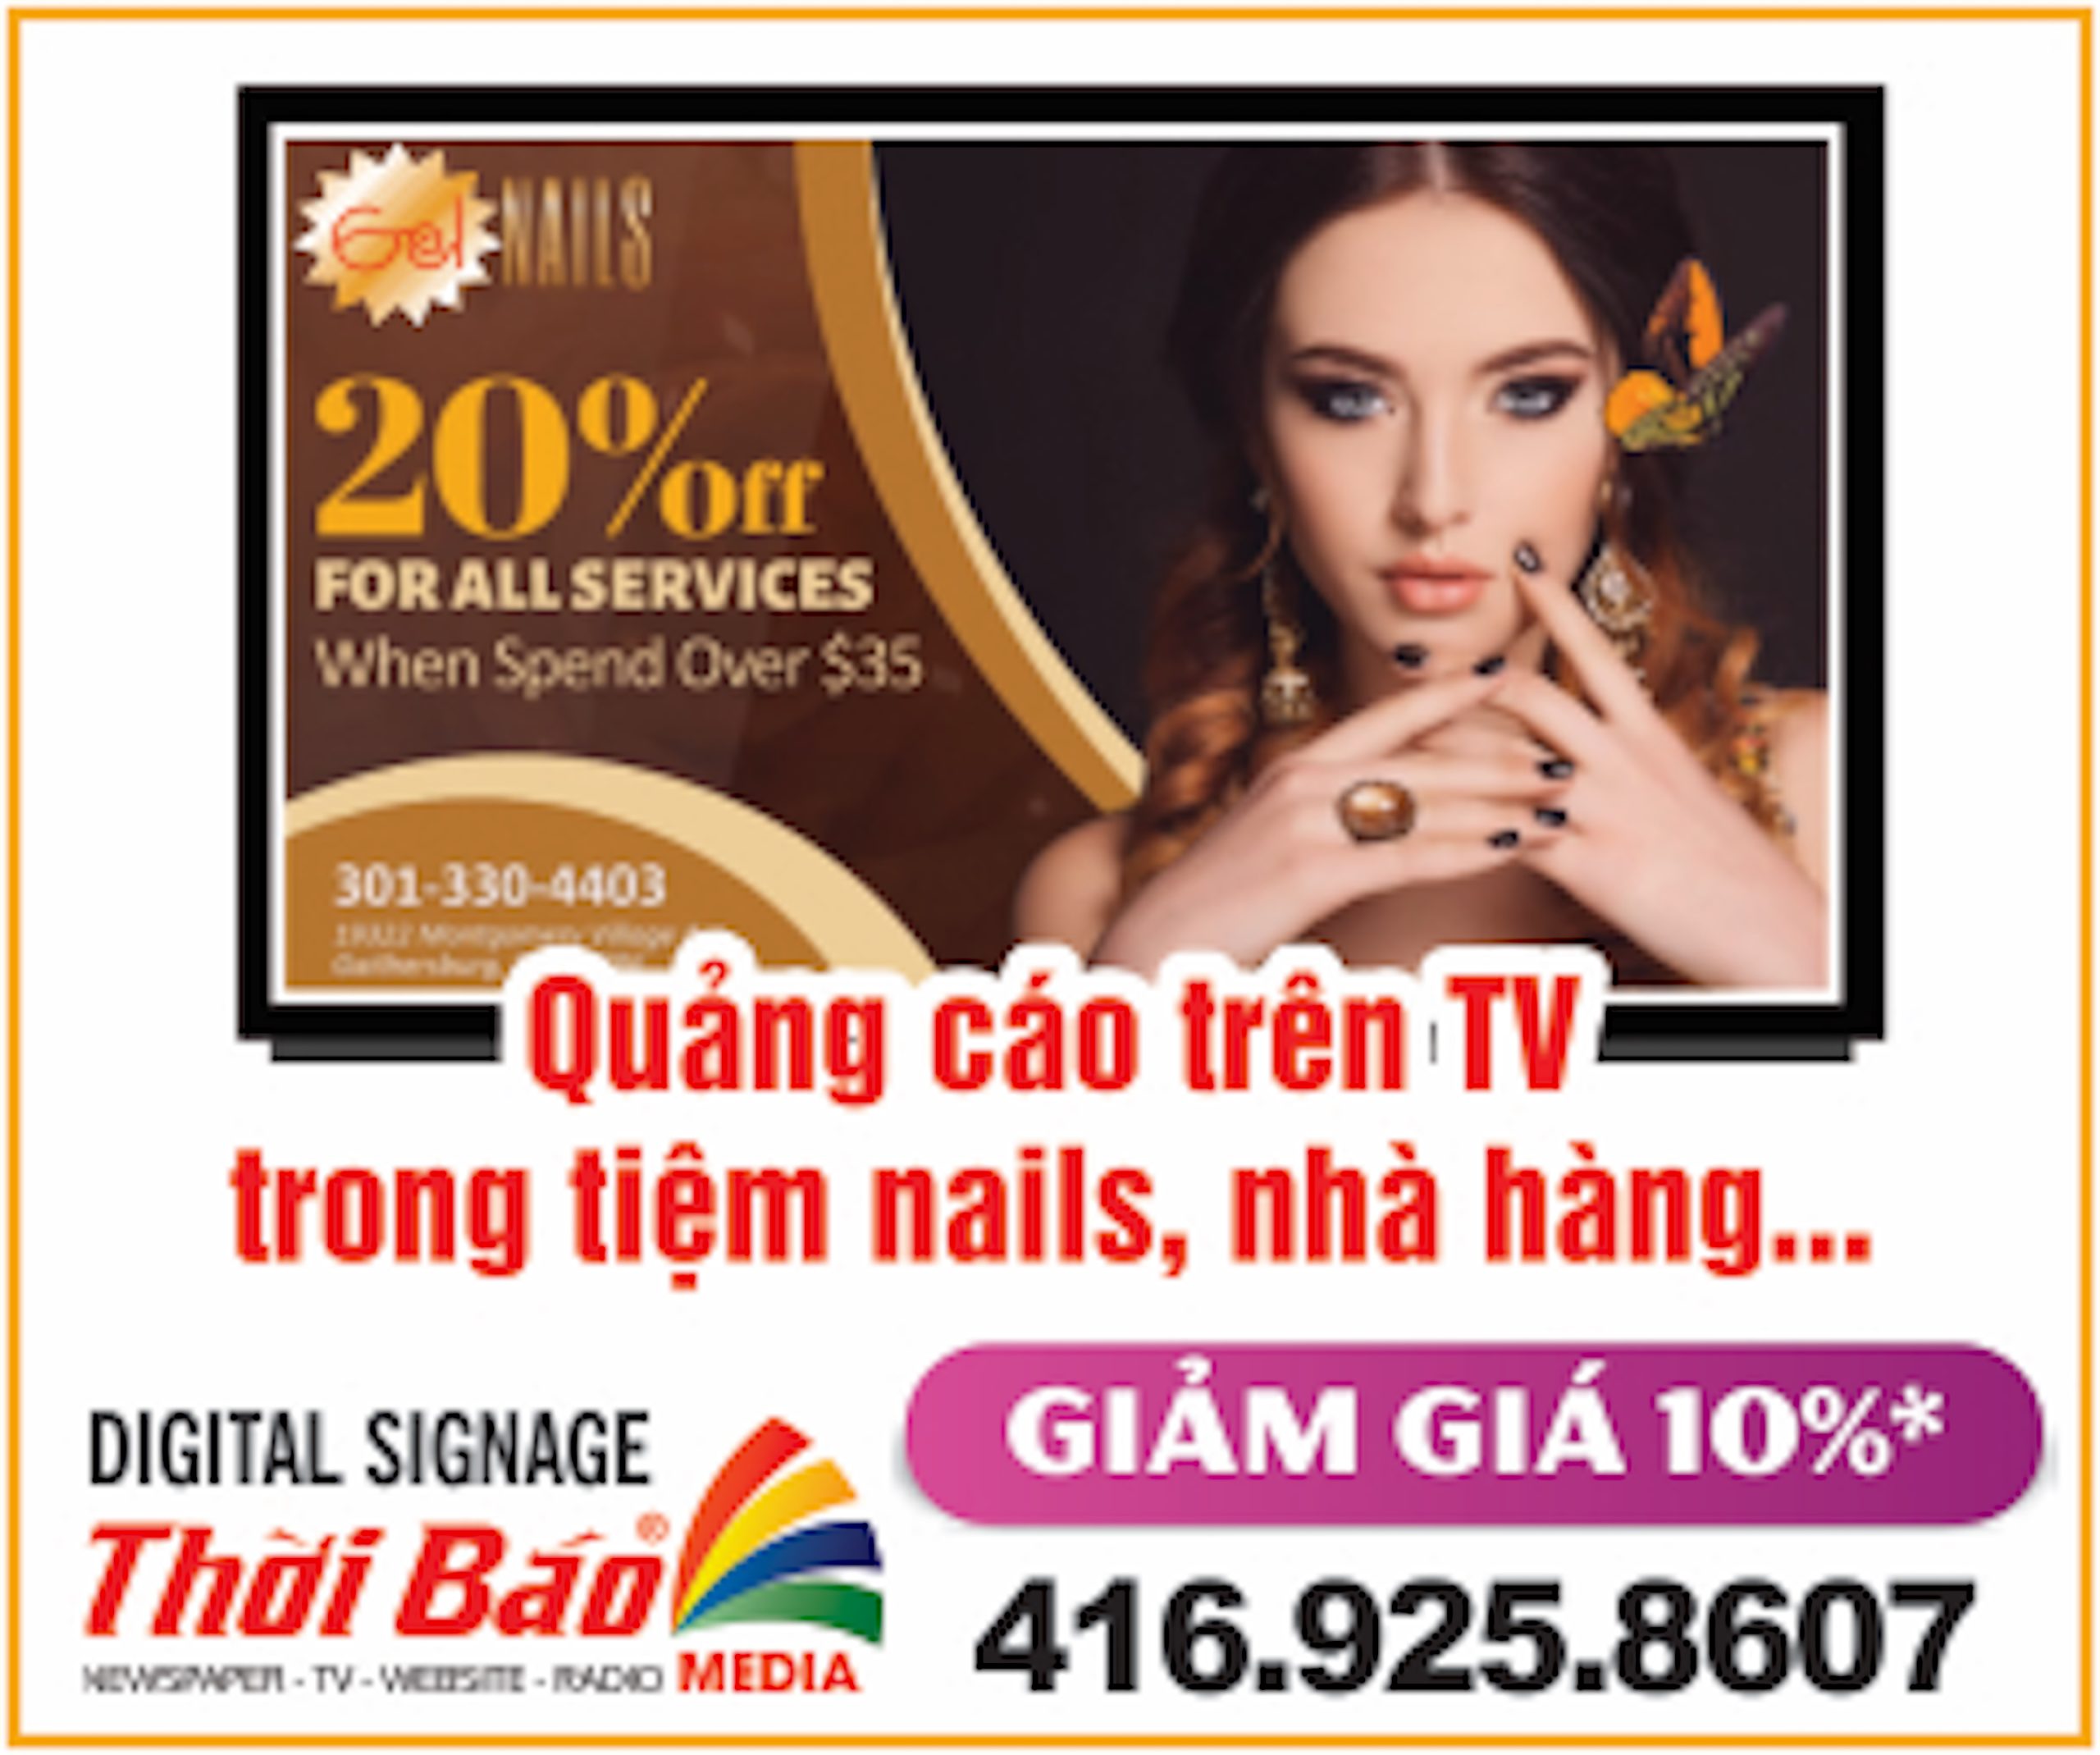 Thoi Bao Digital Signage